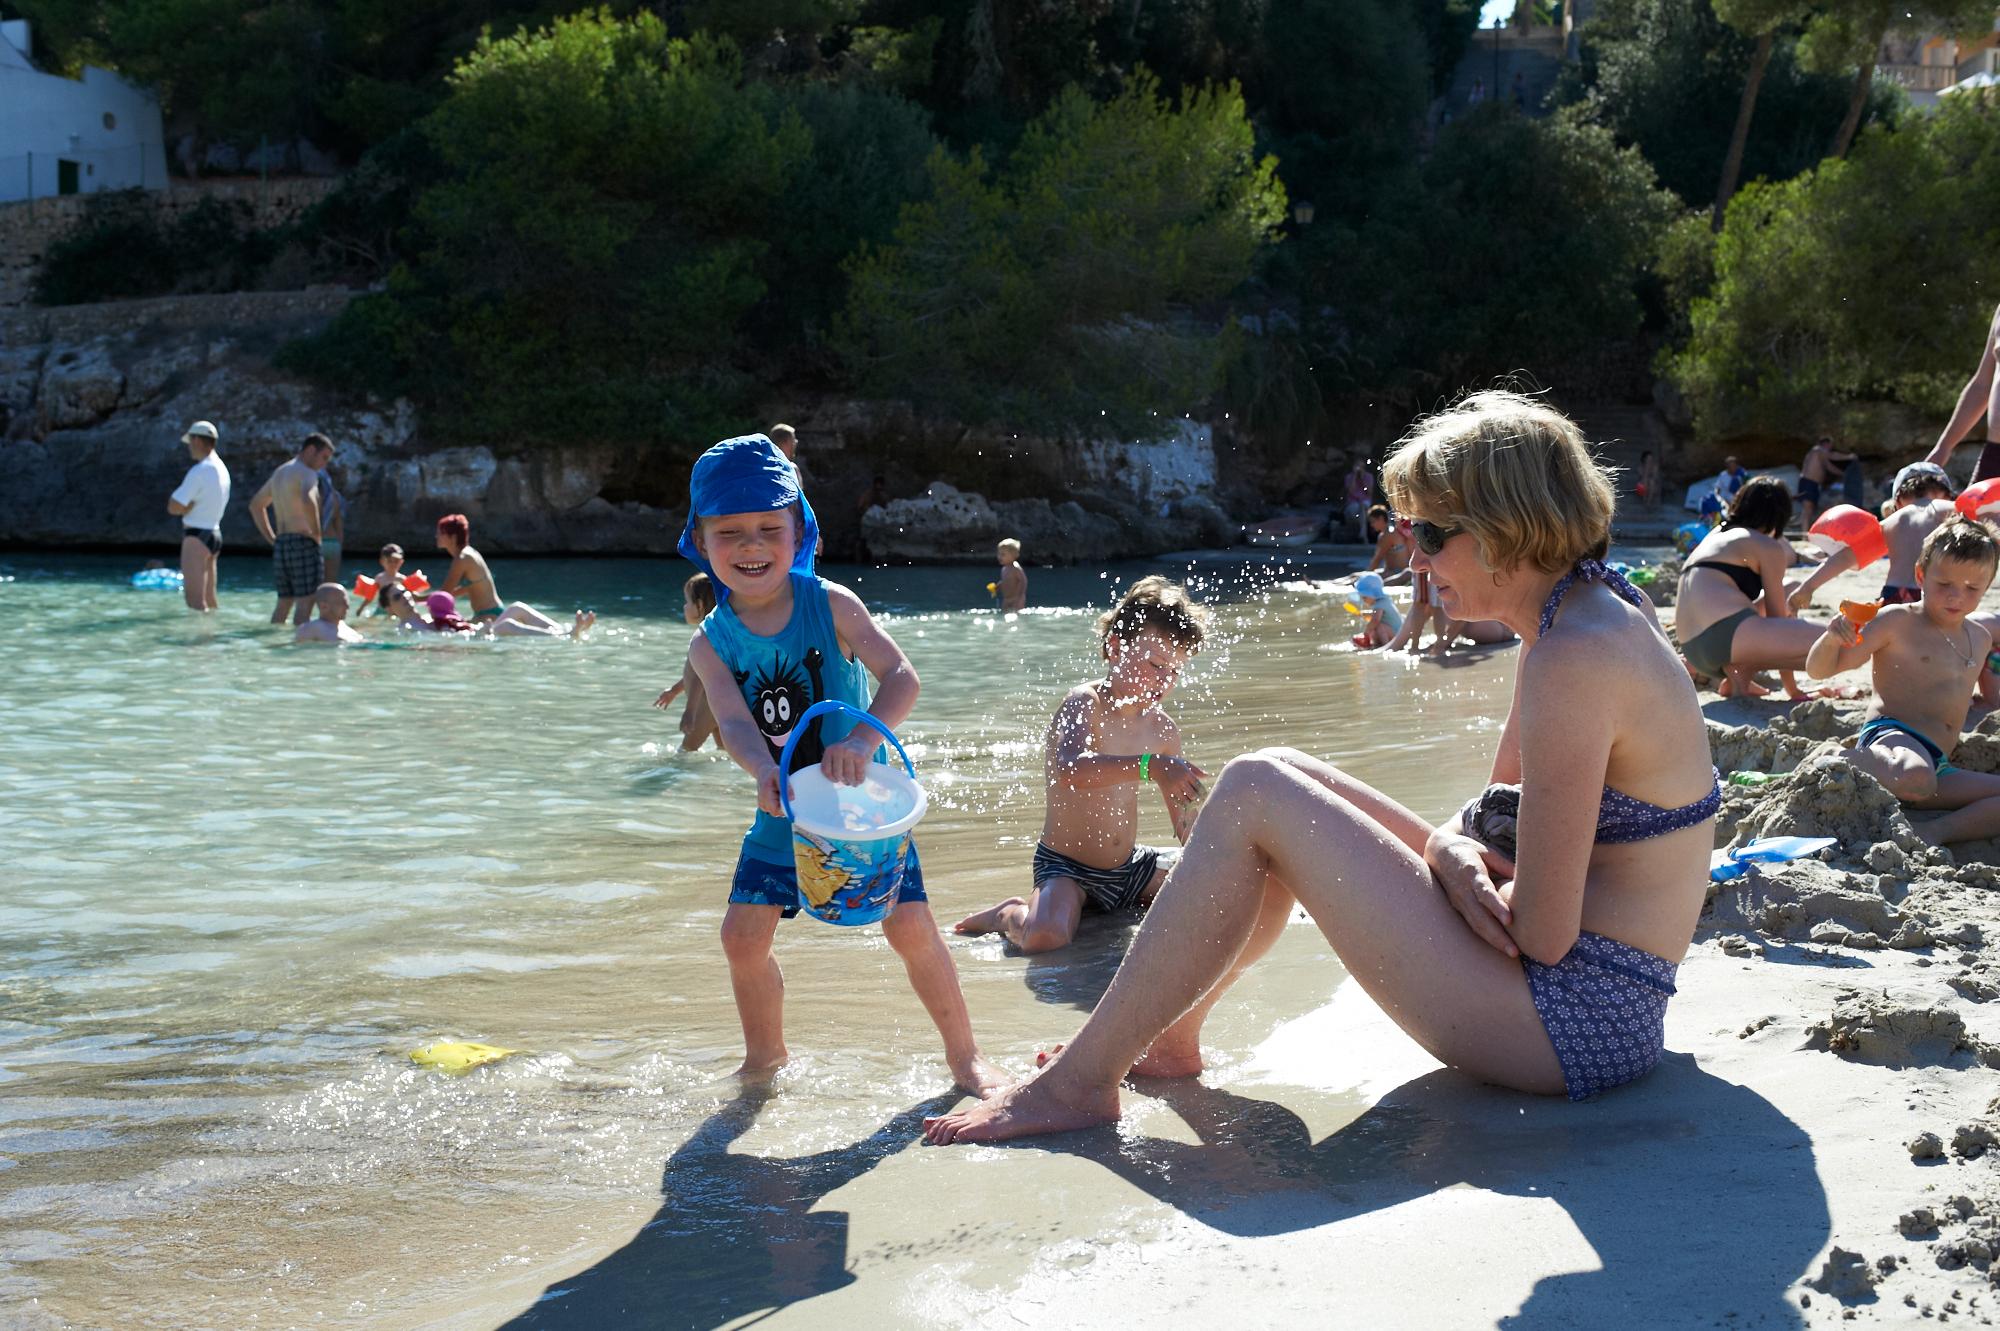 rajce.idnes. beach kids 121 Boy swimming trunks playing on sandy beach Images, Stock ...